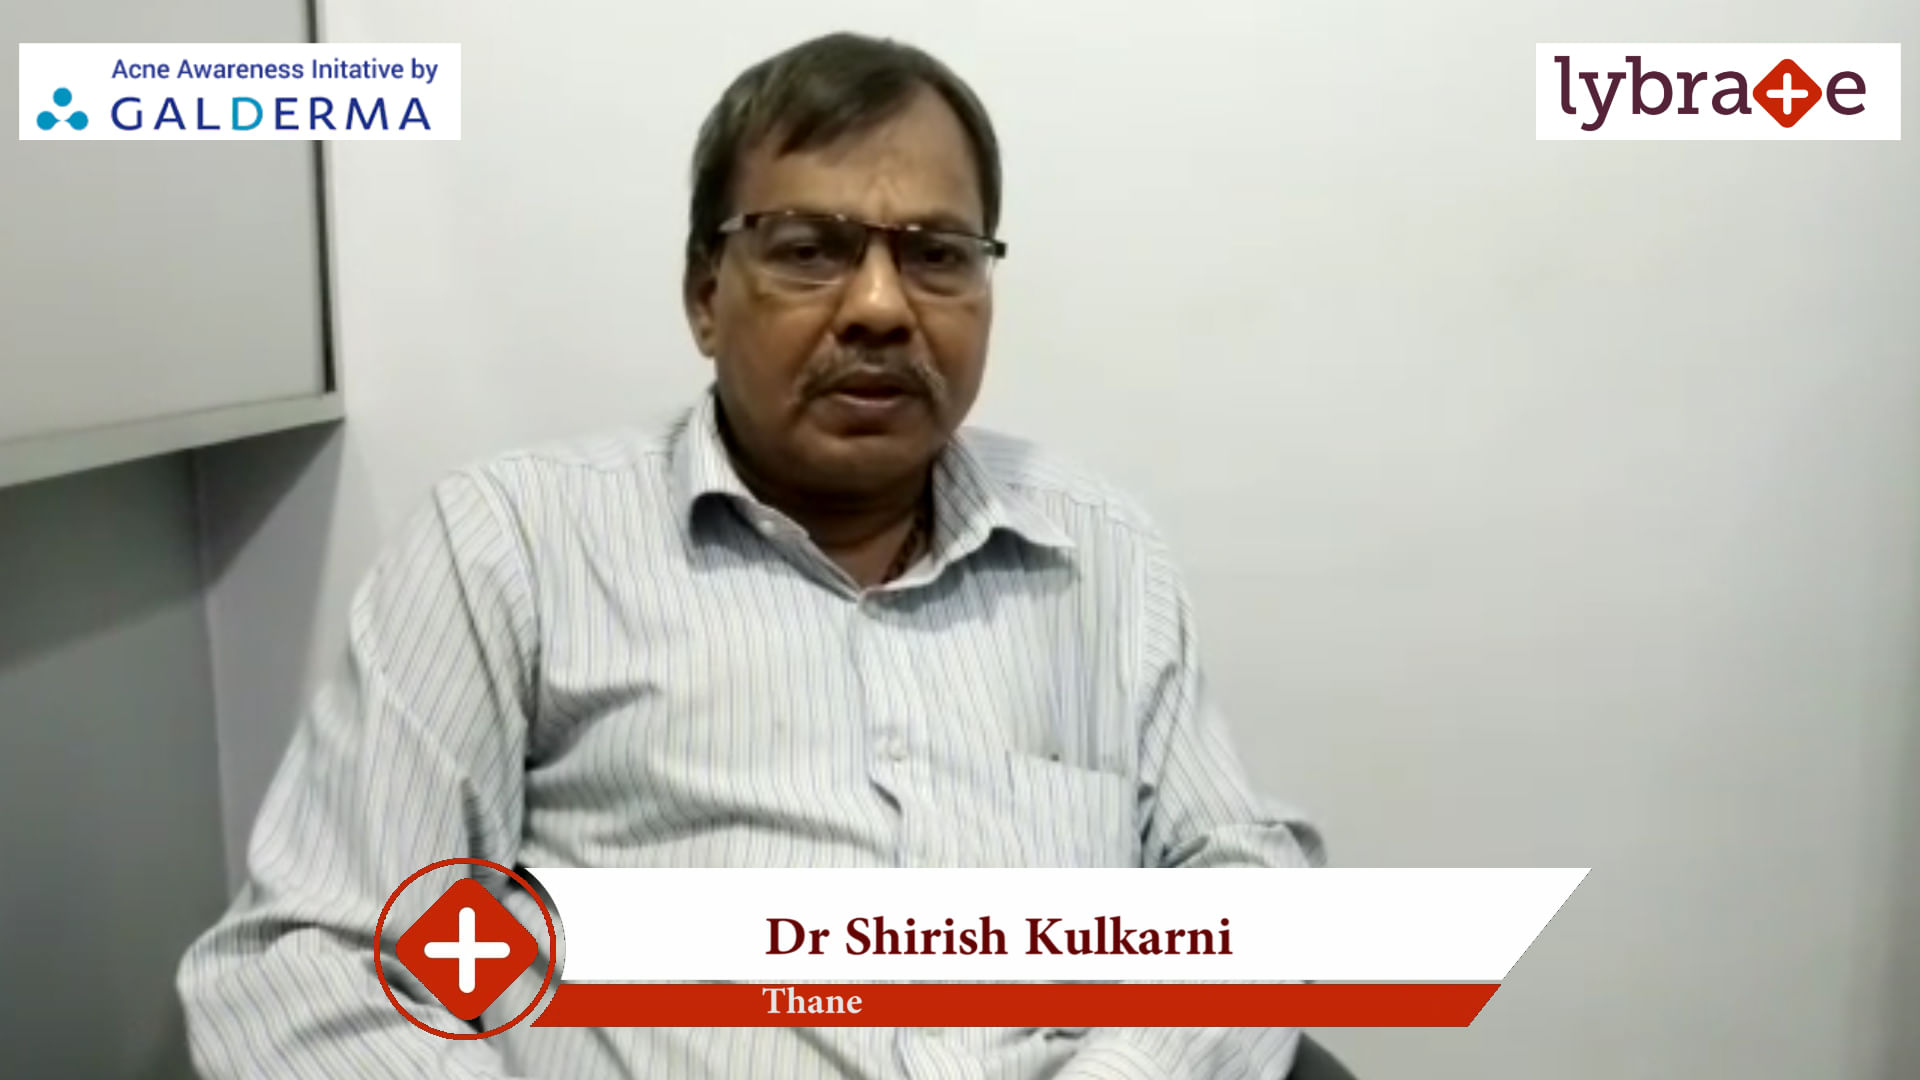 Lybrate | Dr. Shirish Kulkarni speaks on IMPORTANCE OF TREATING ACNE EARLY